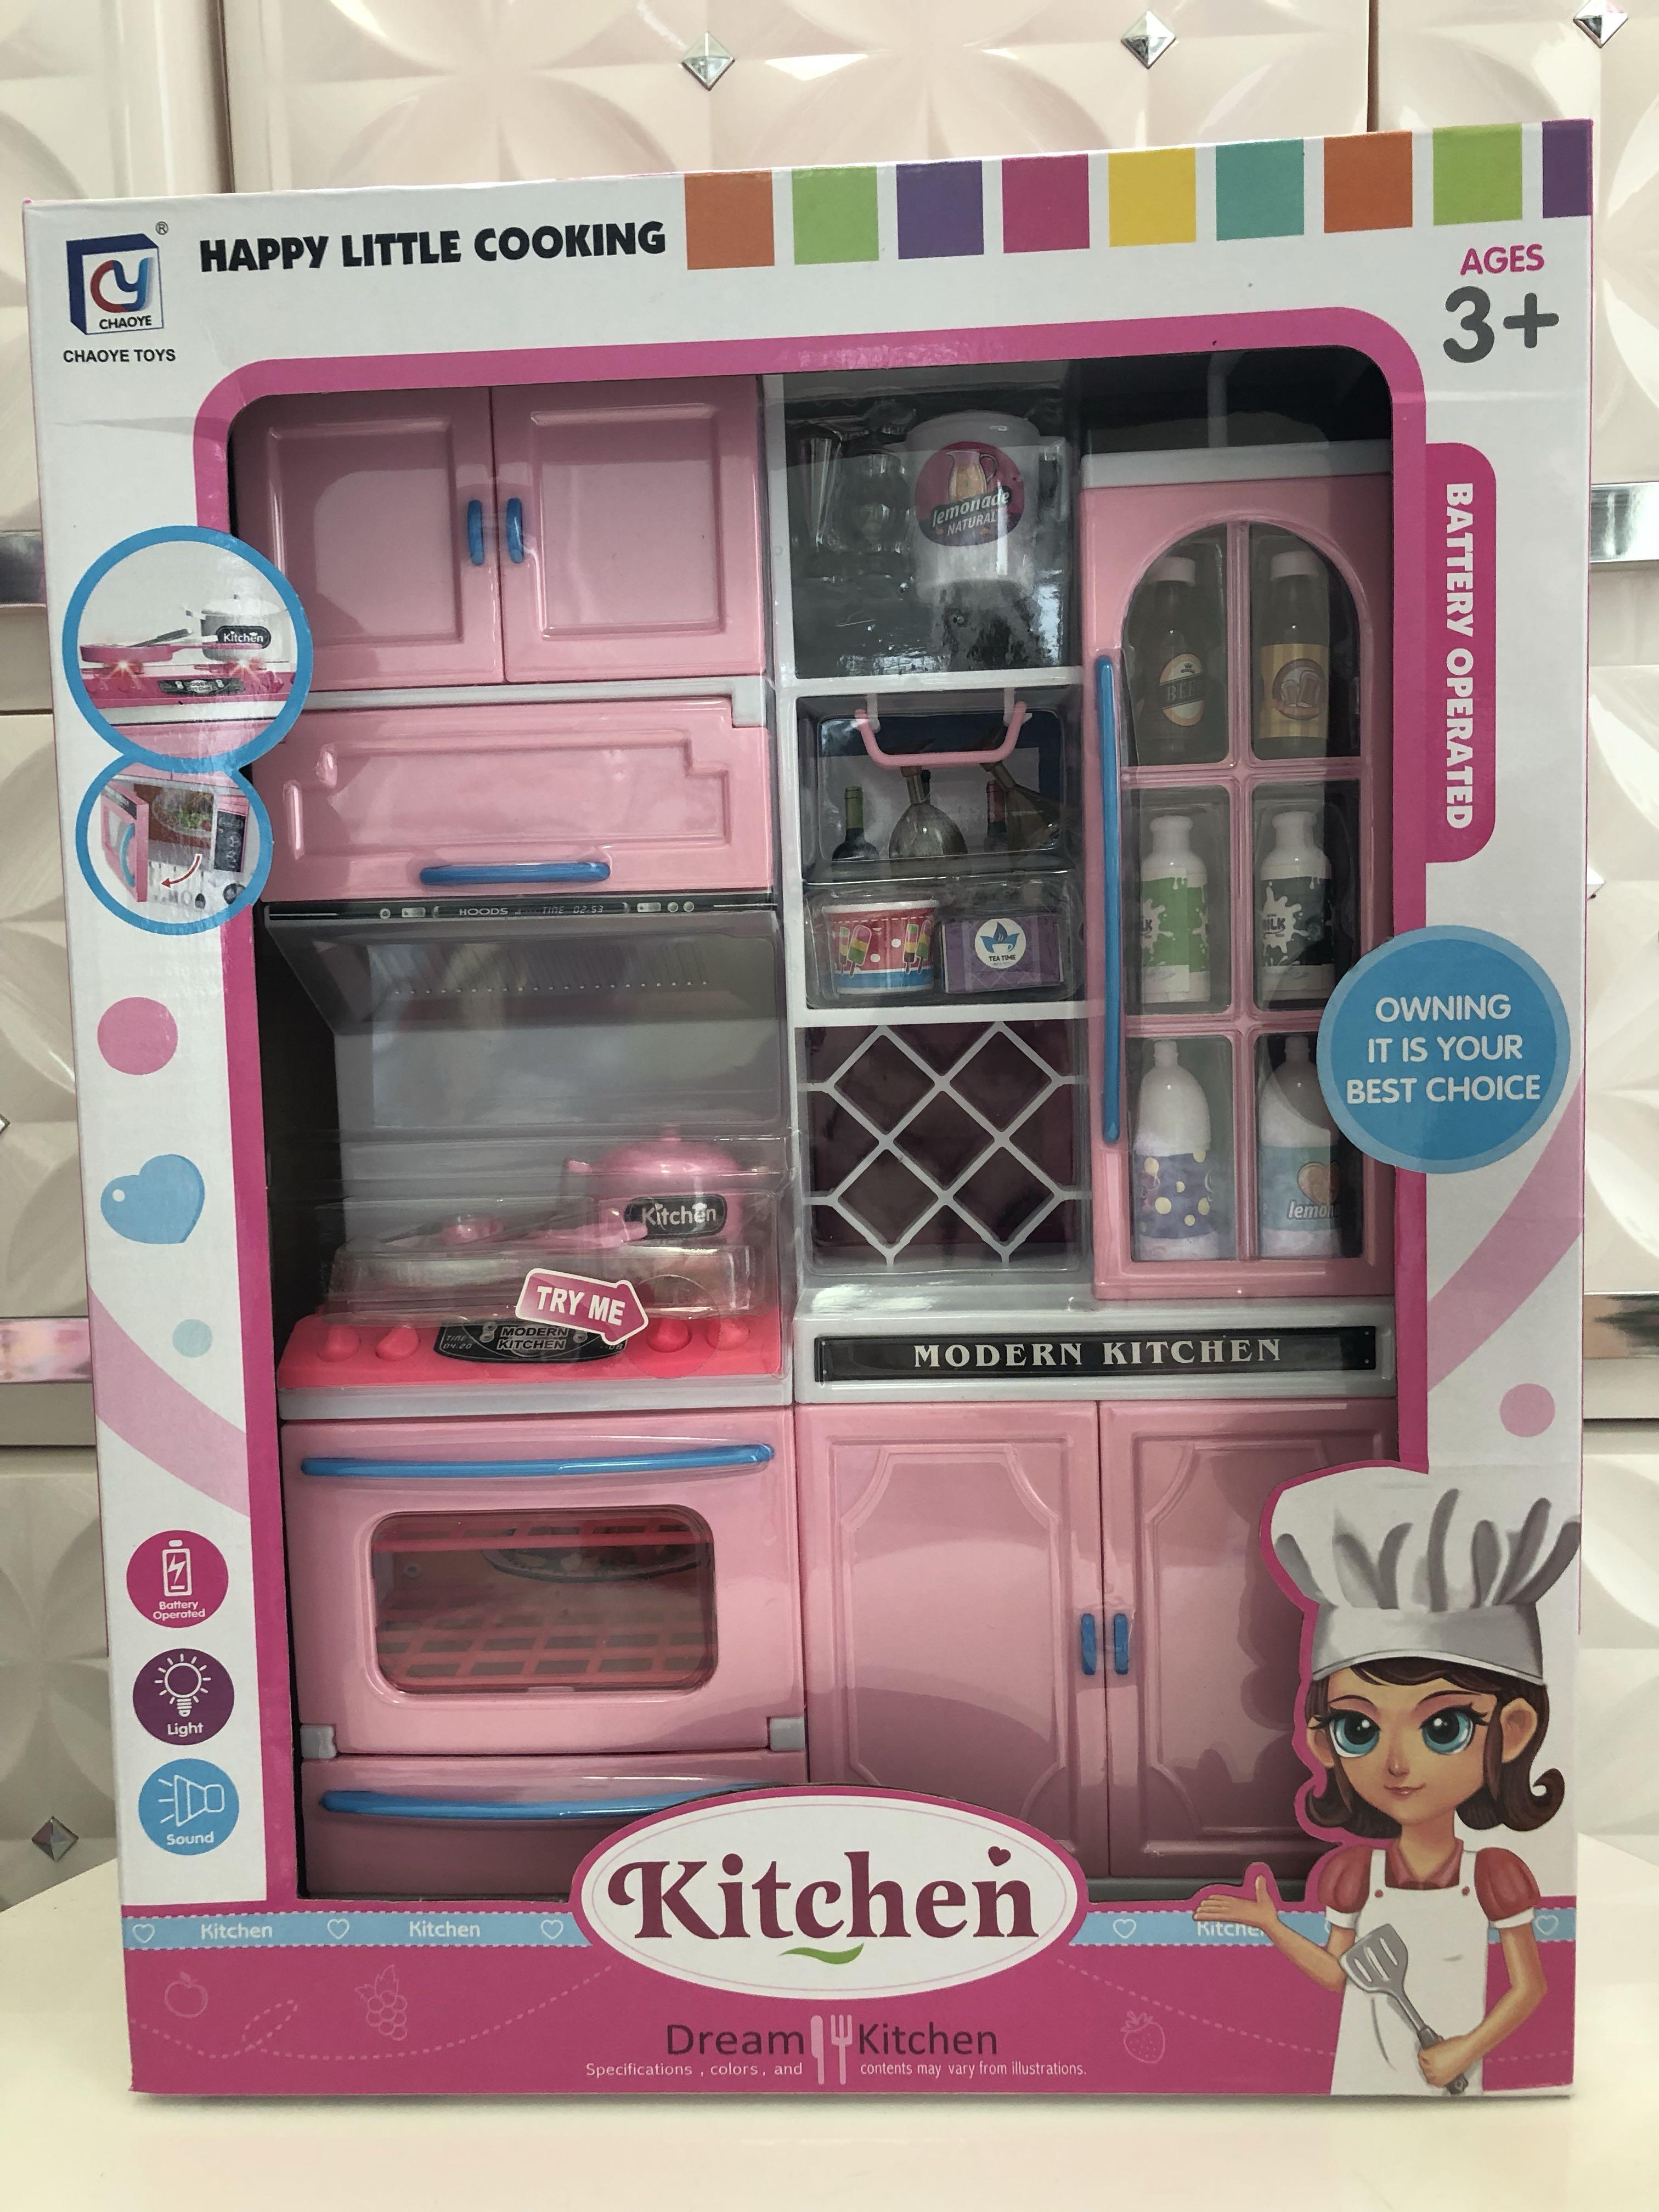 barbie doll barbie doll kitchen set